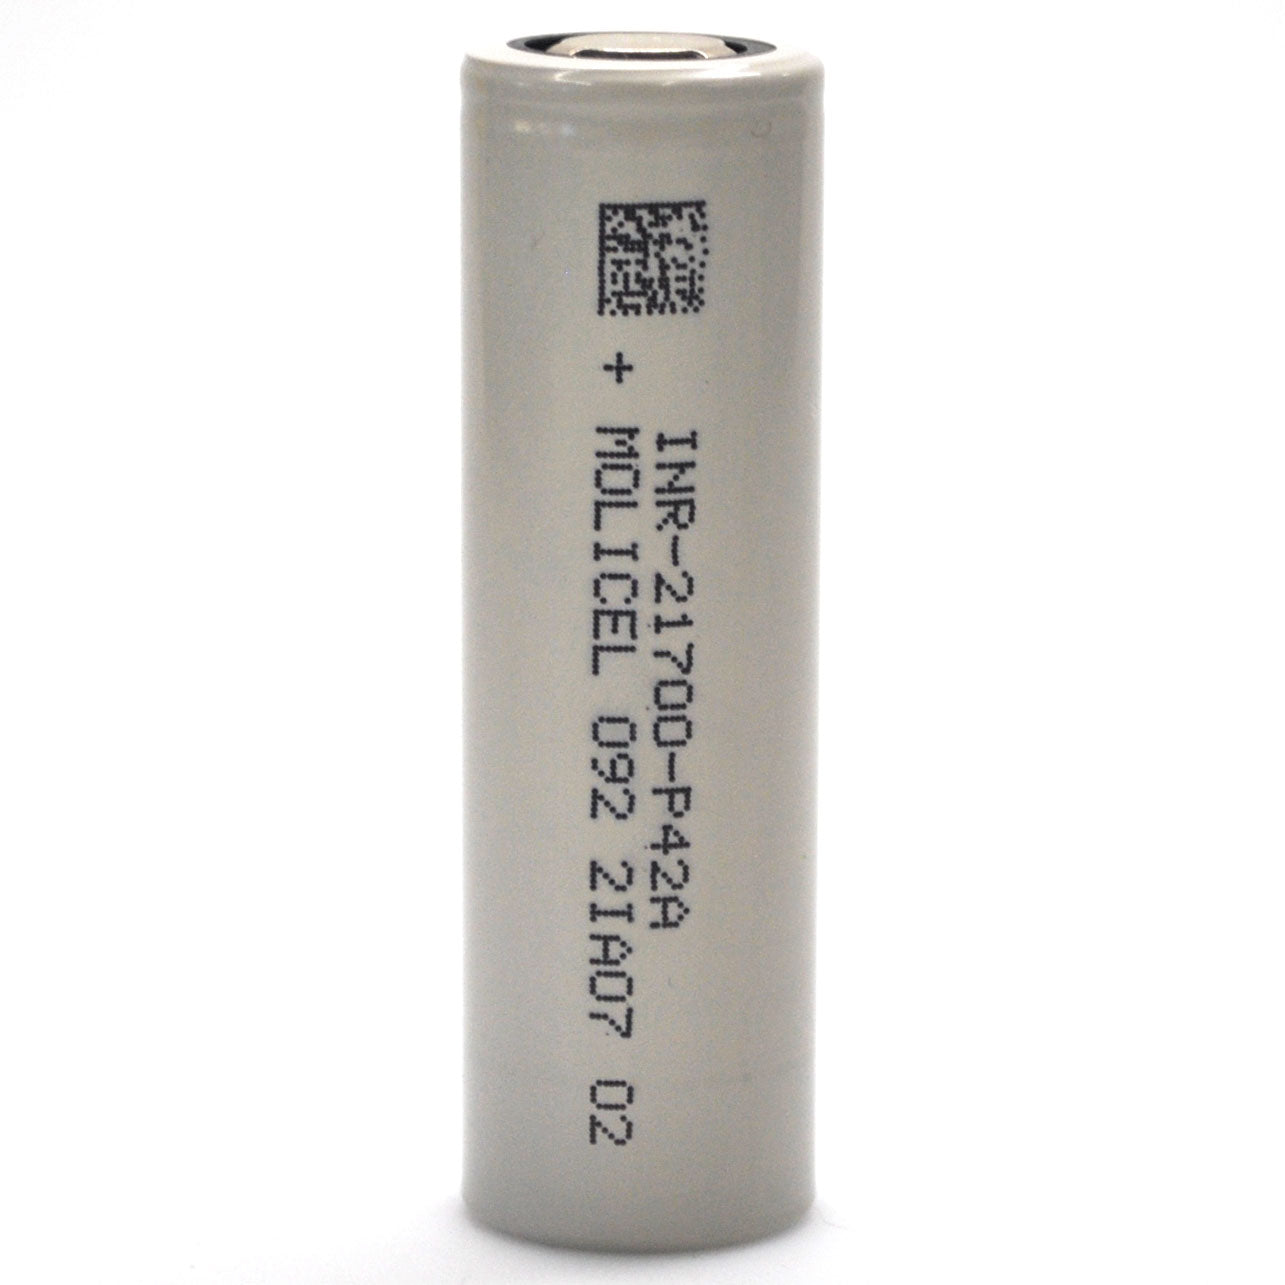 Trein Alsjeblieft kijk Arbitrage Molicel/NPE INR-21700-P42A 4200mAh 21700 Battery - Authorized Dealer –  Liion Wholesale Batteries